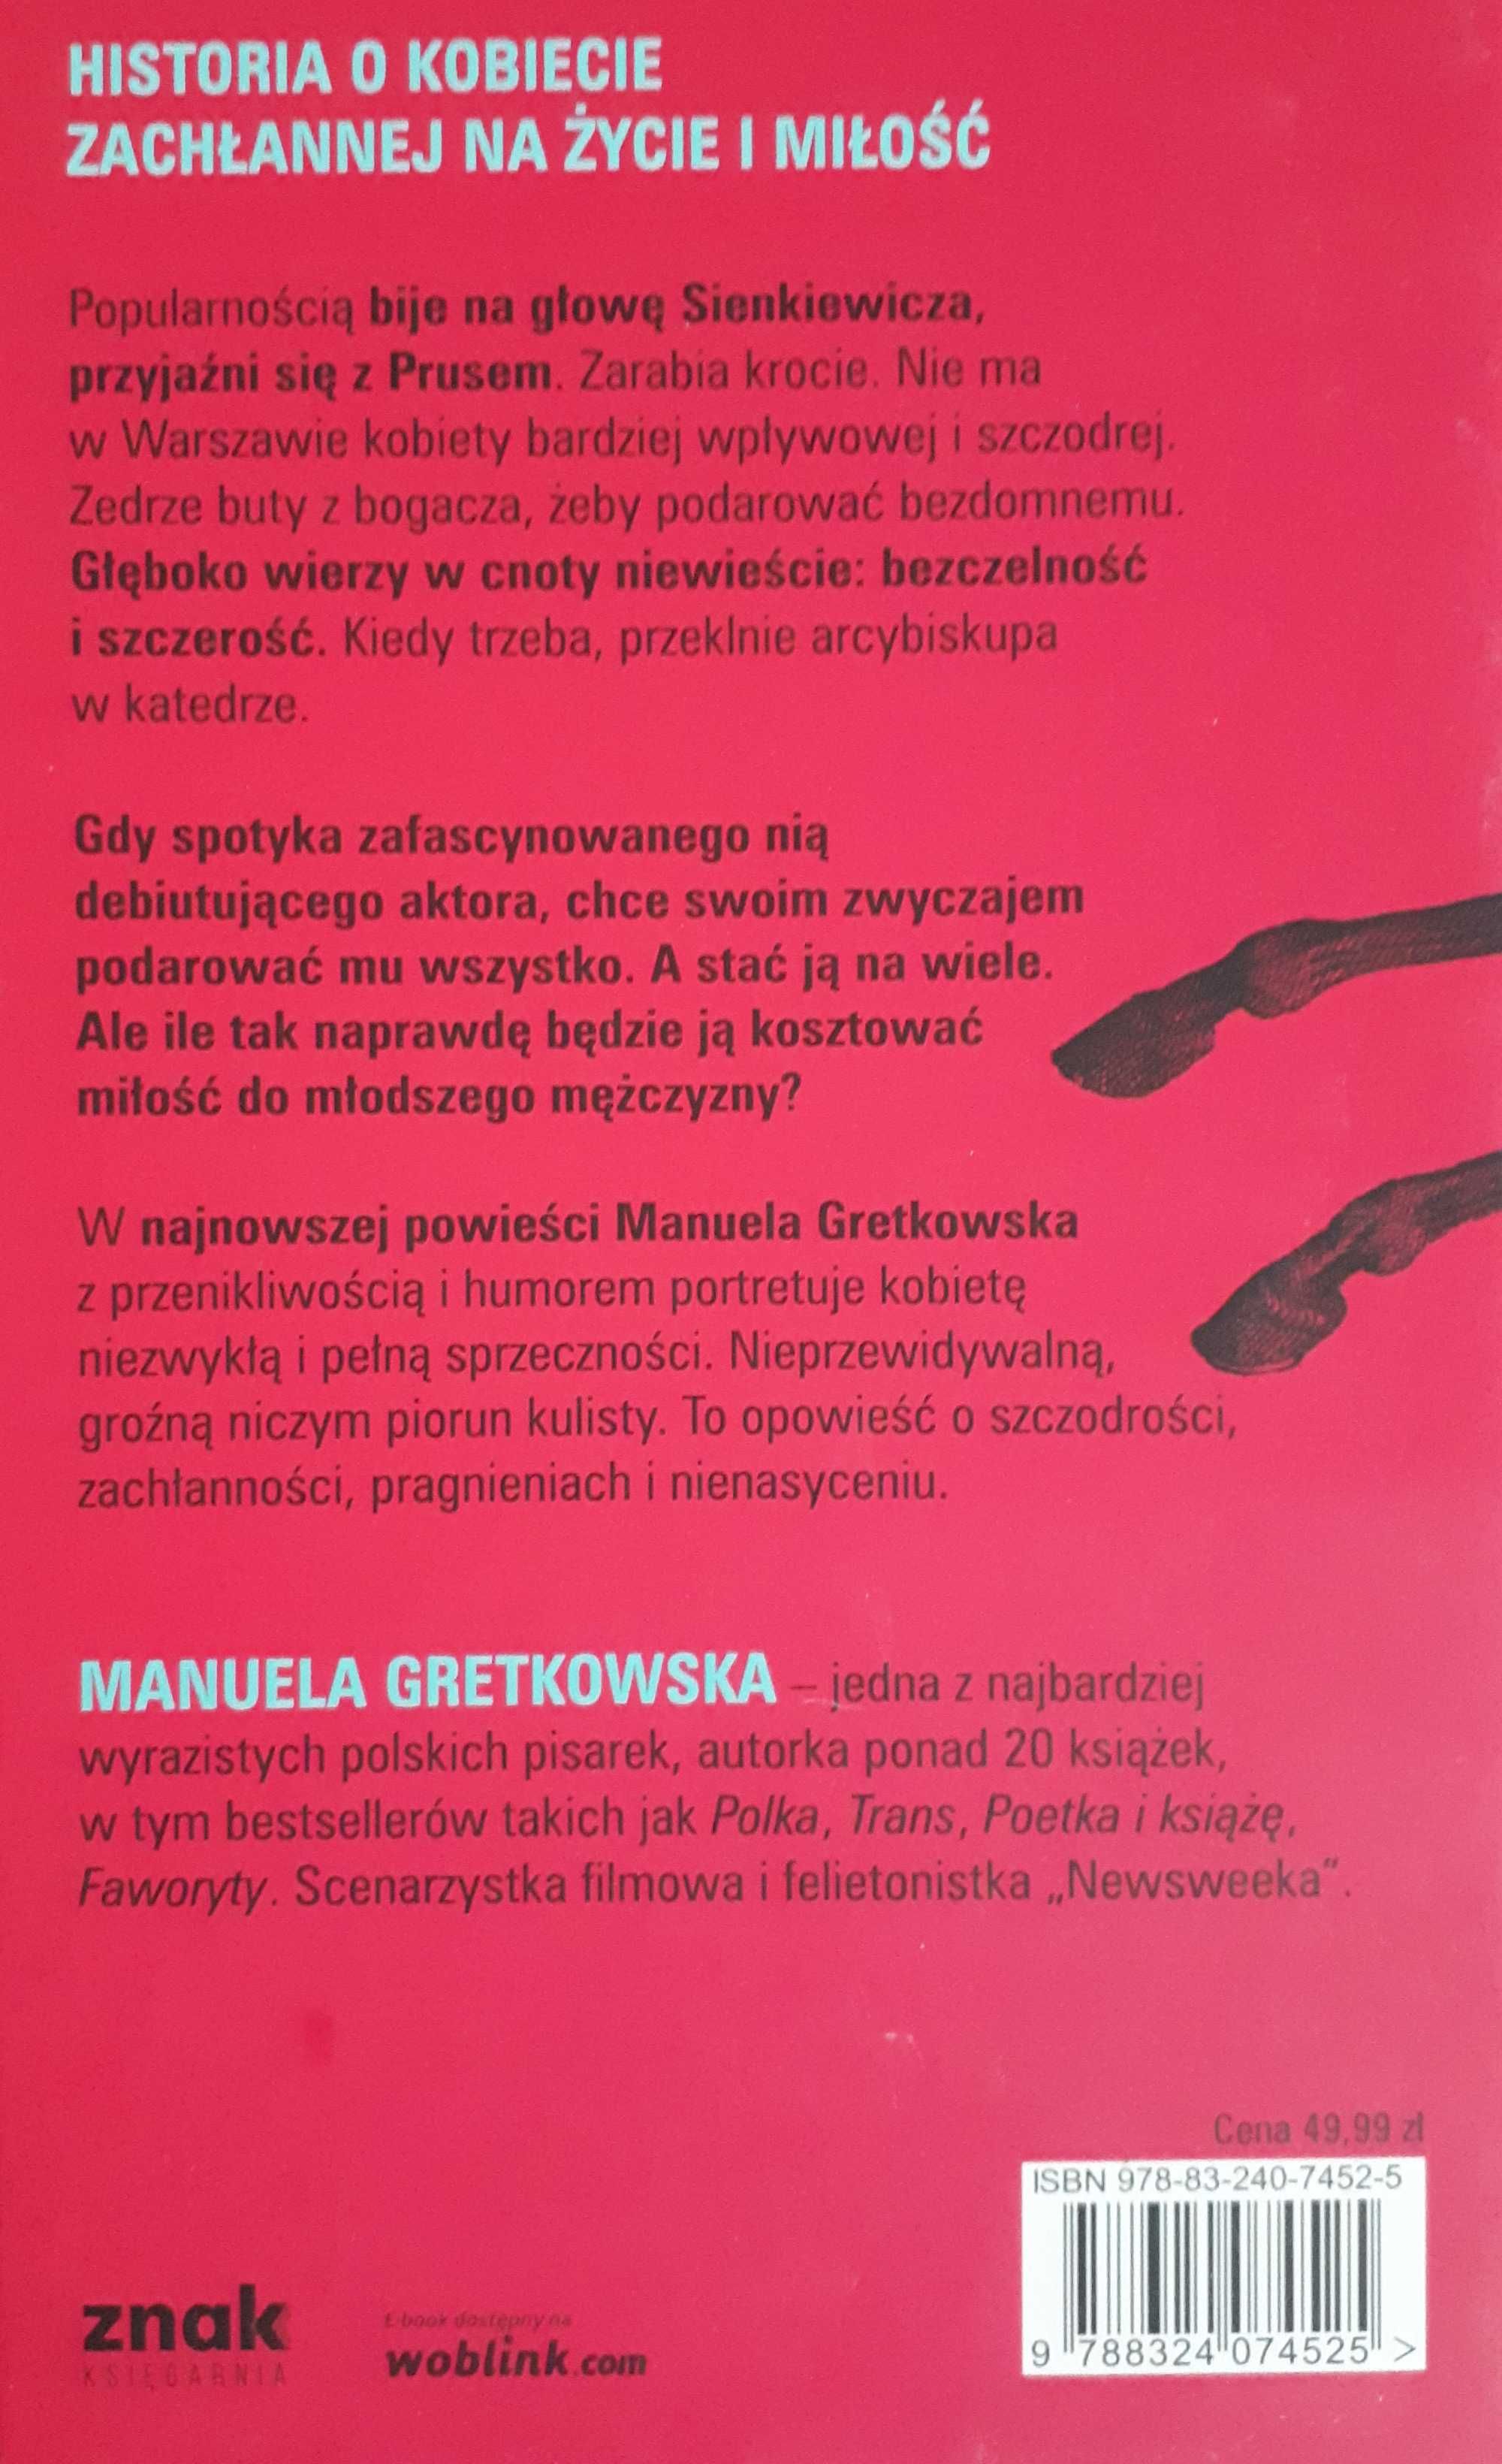 "Mistrzyni" Manuela Gretkowska